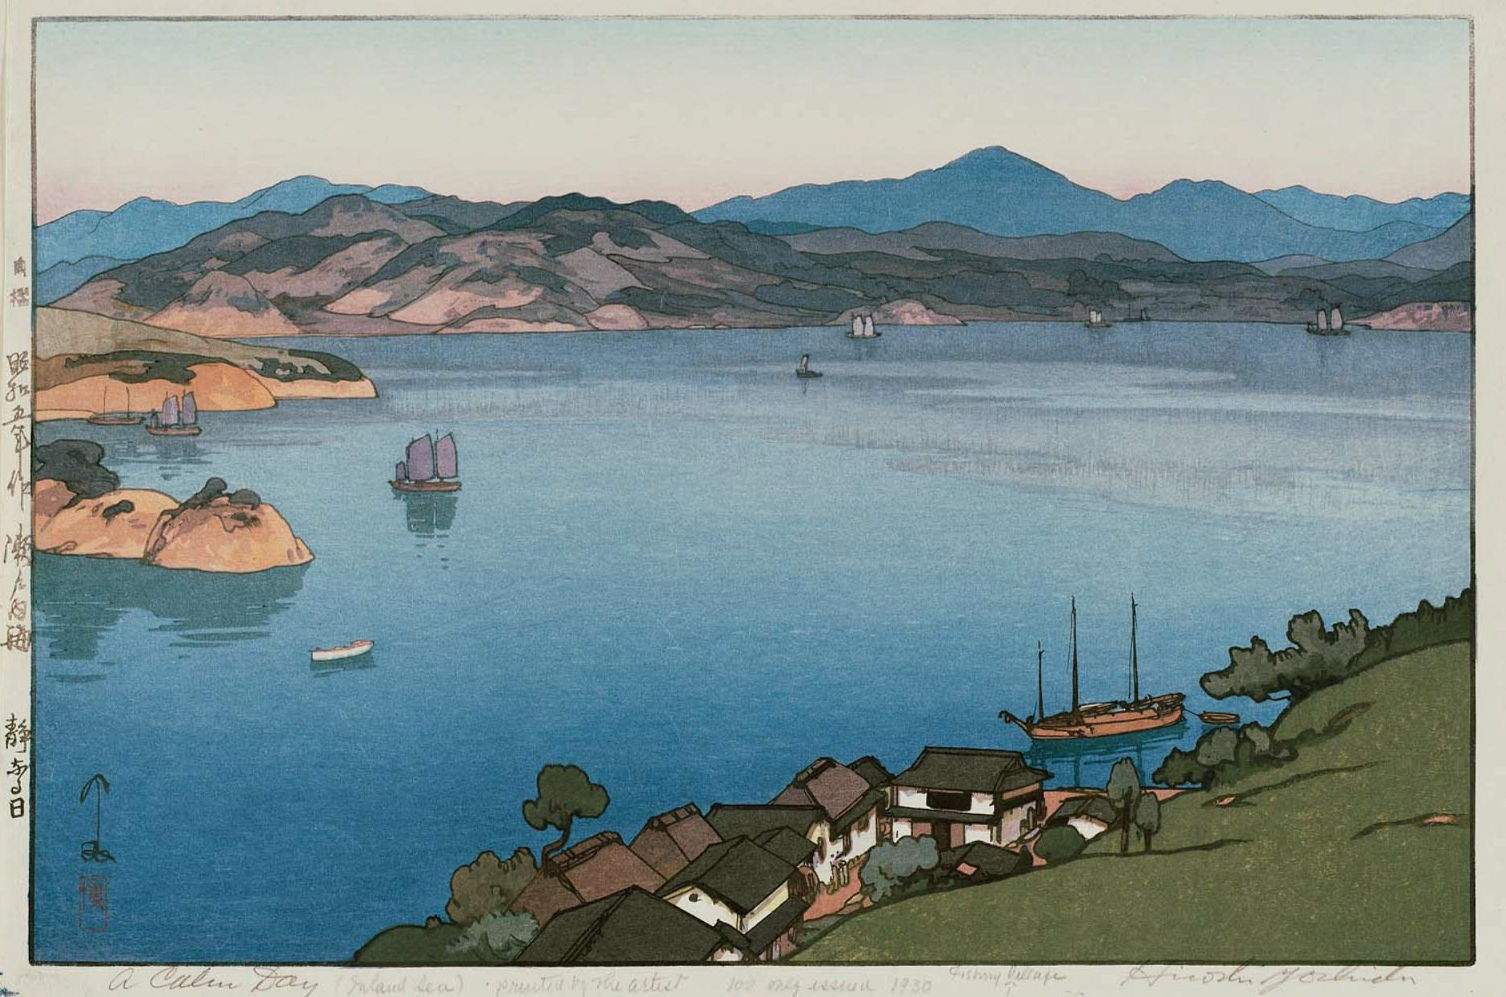 Hiroshi Yoshida “A Calm Day” 1930 woodblock print